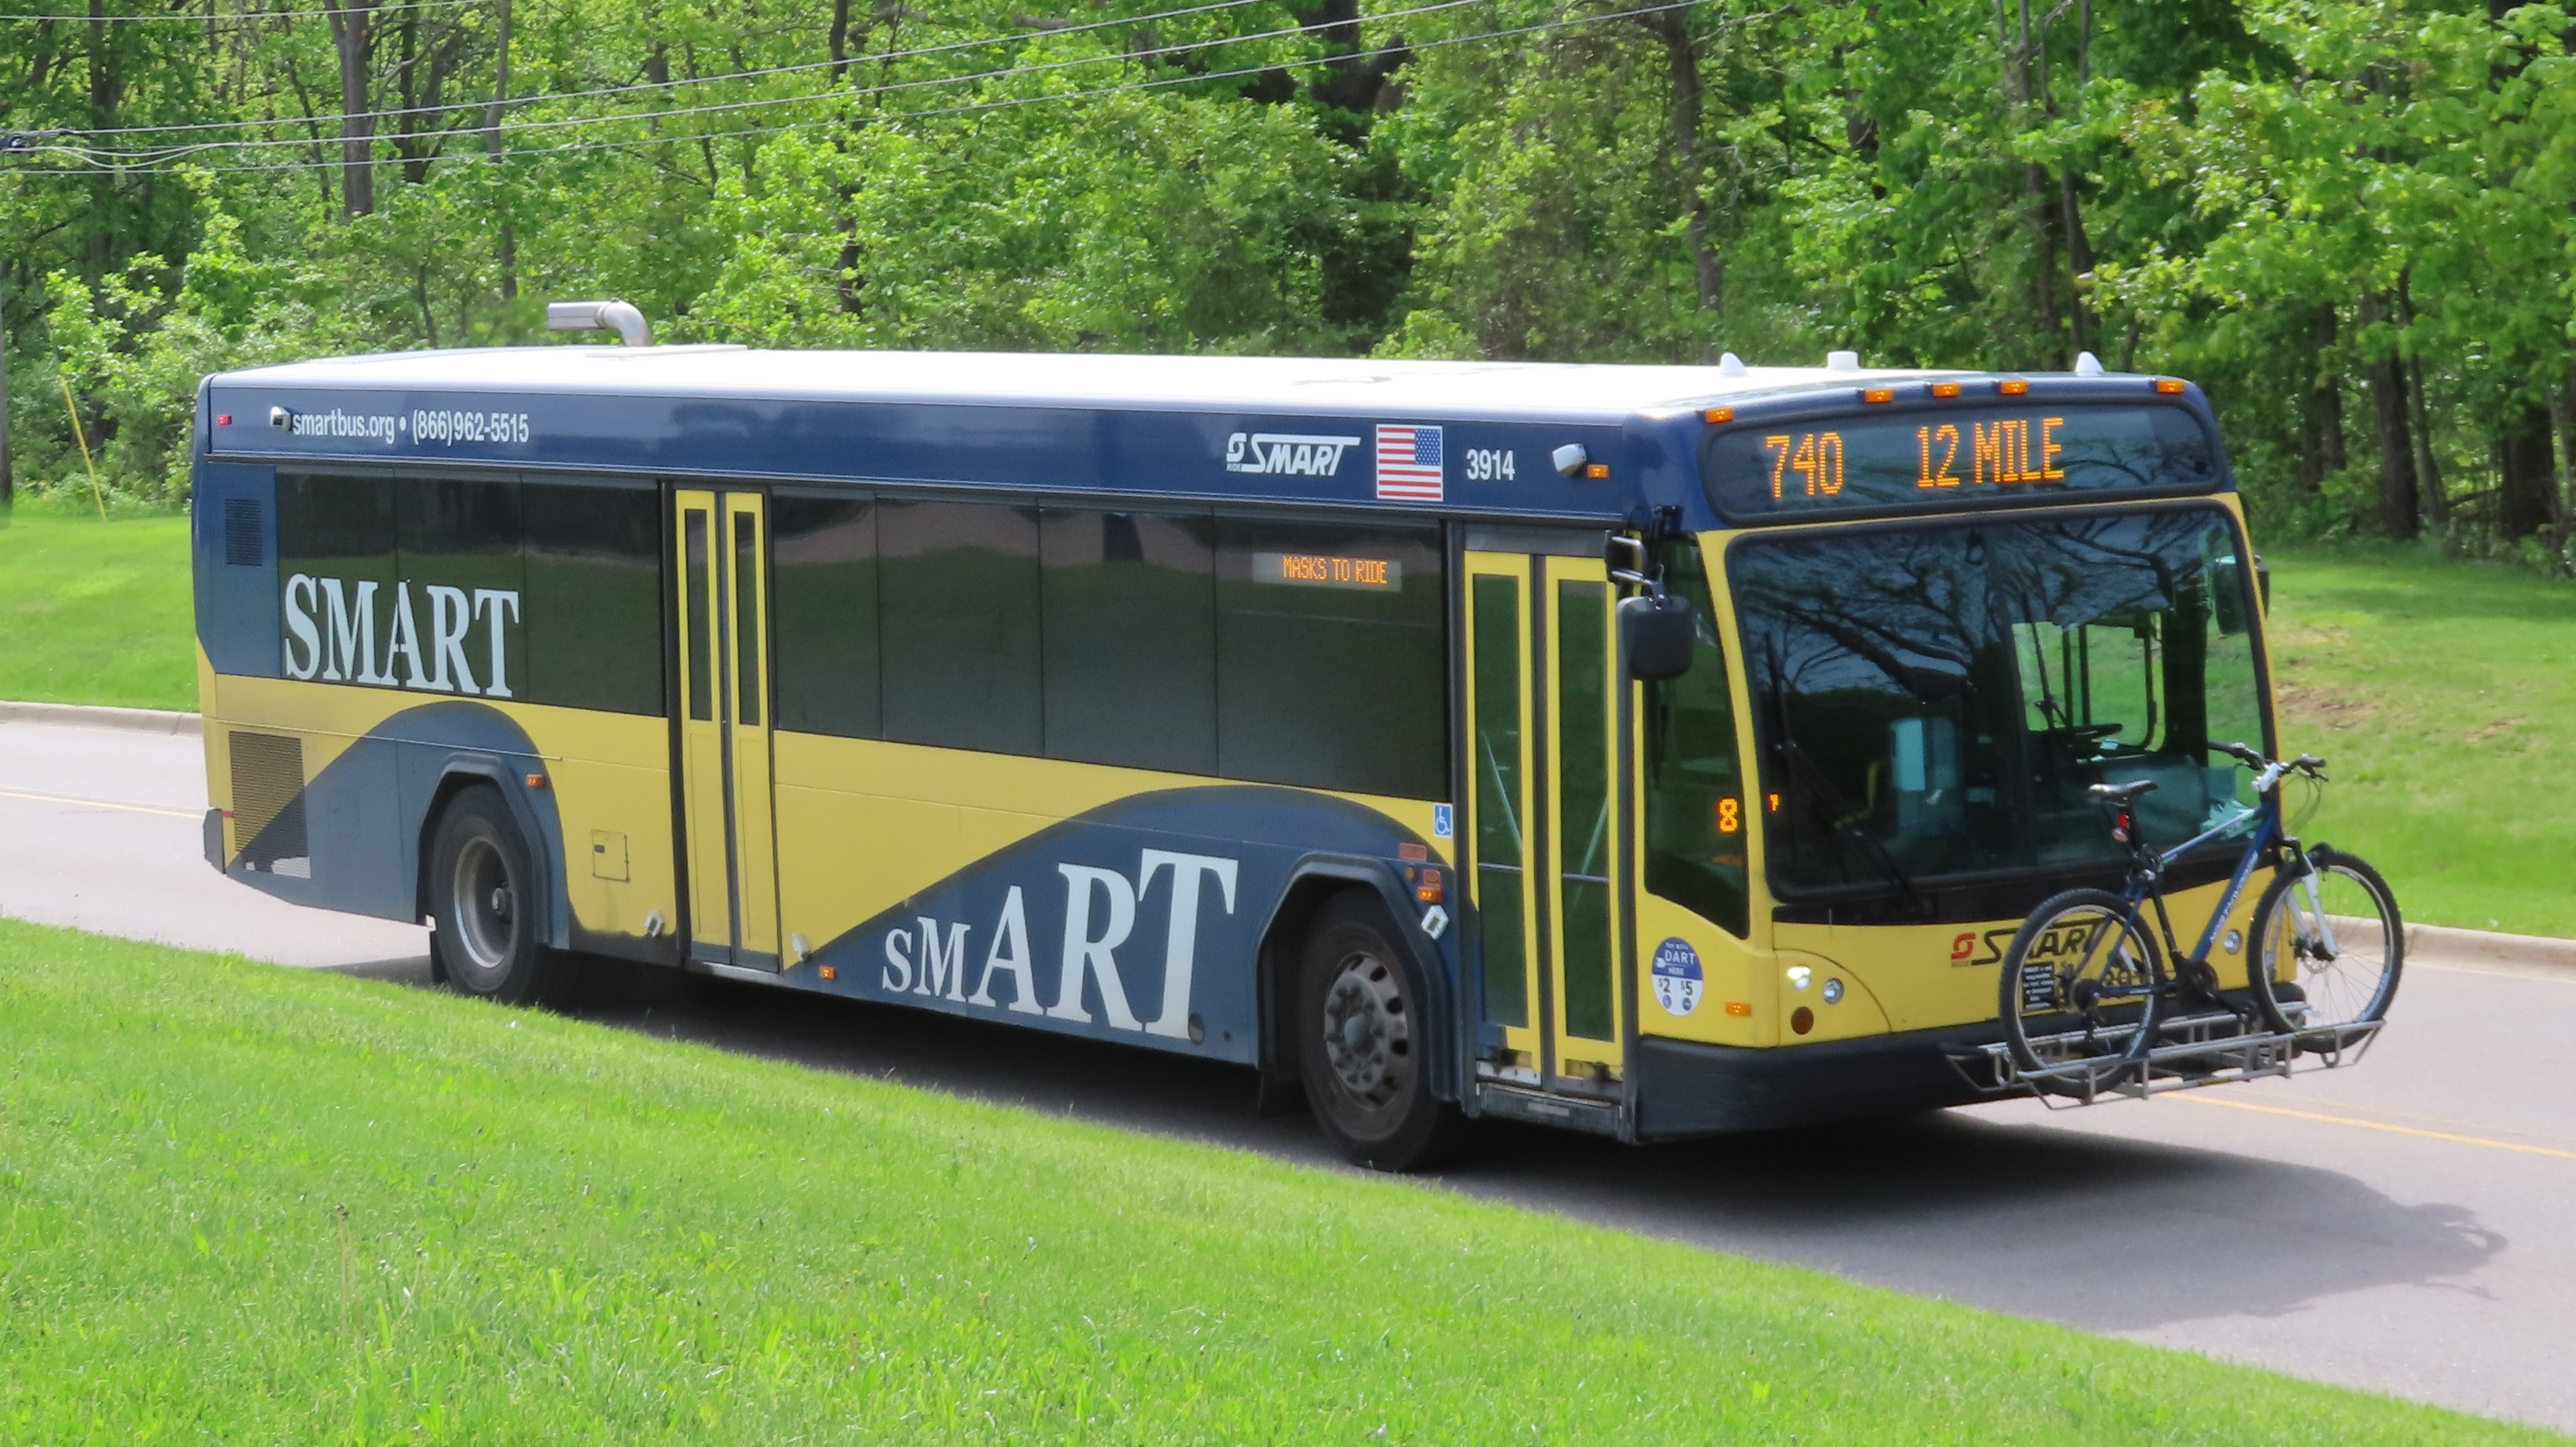 SMART bus 3914, a 2019 Gillig BRT, seen at Oakland Community College's Orchard Ridge campus in Farmington Hills, Michigan.